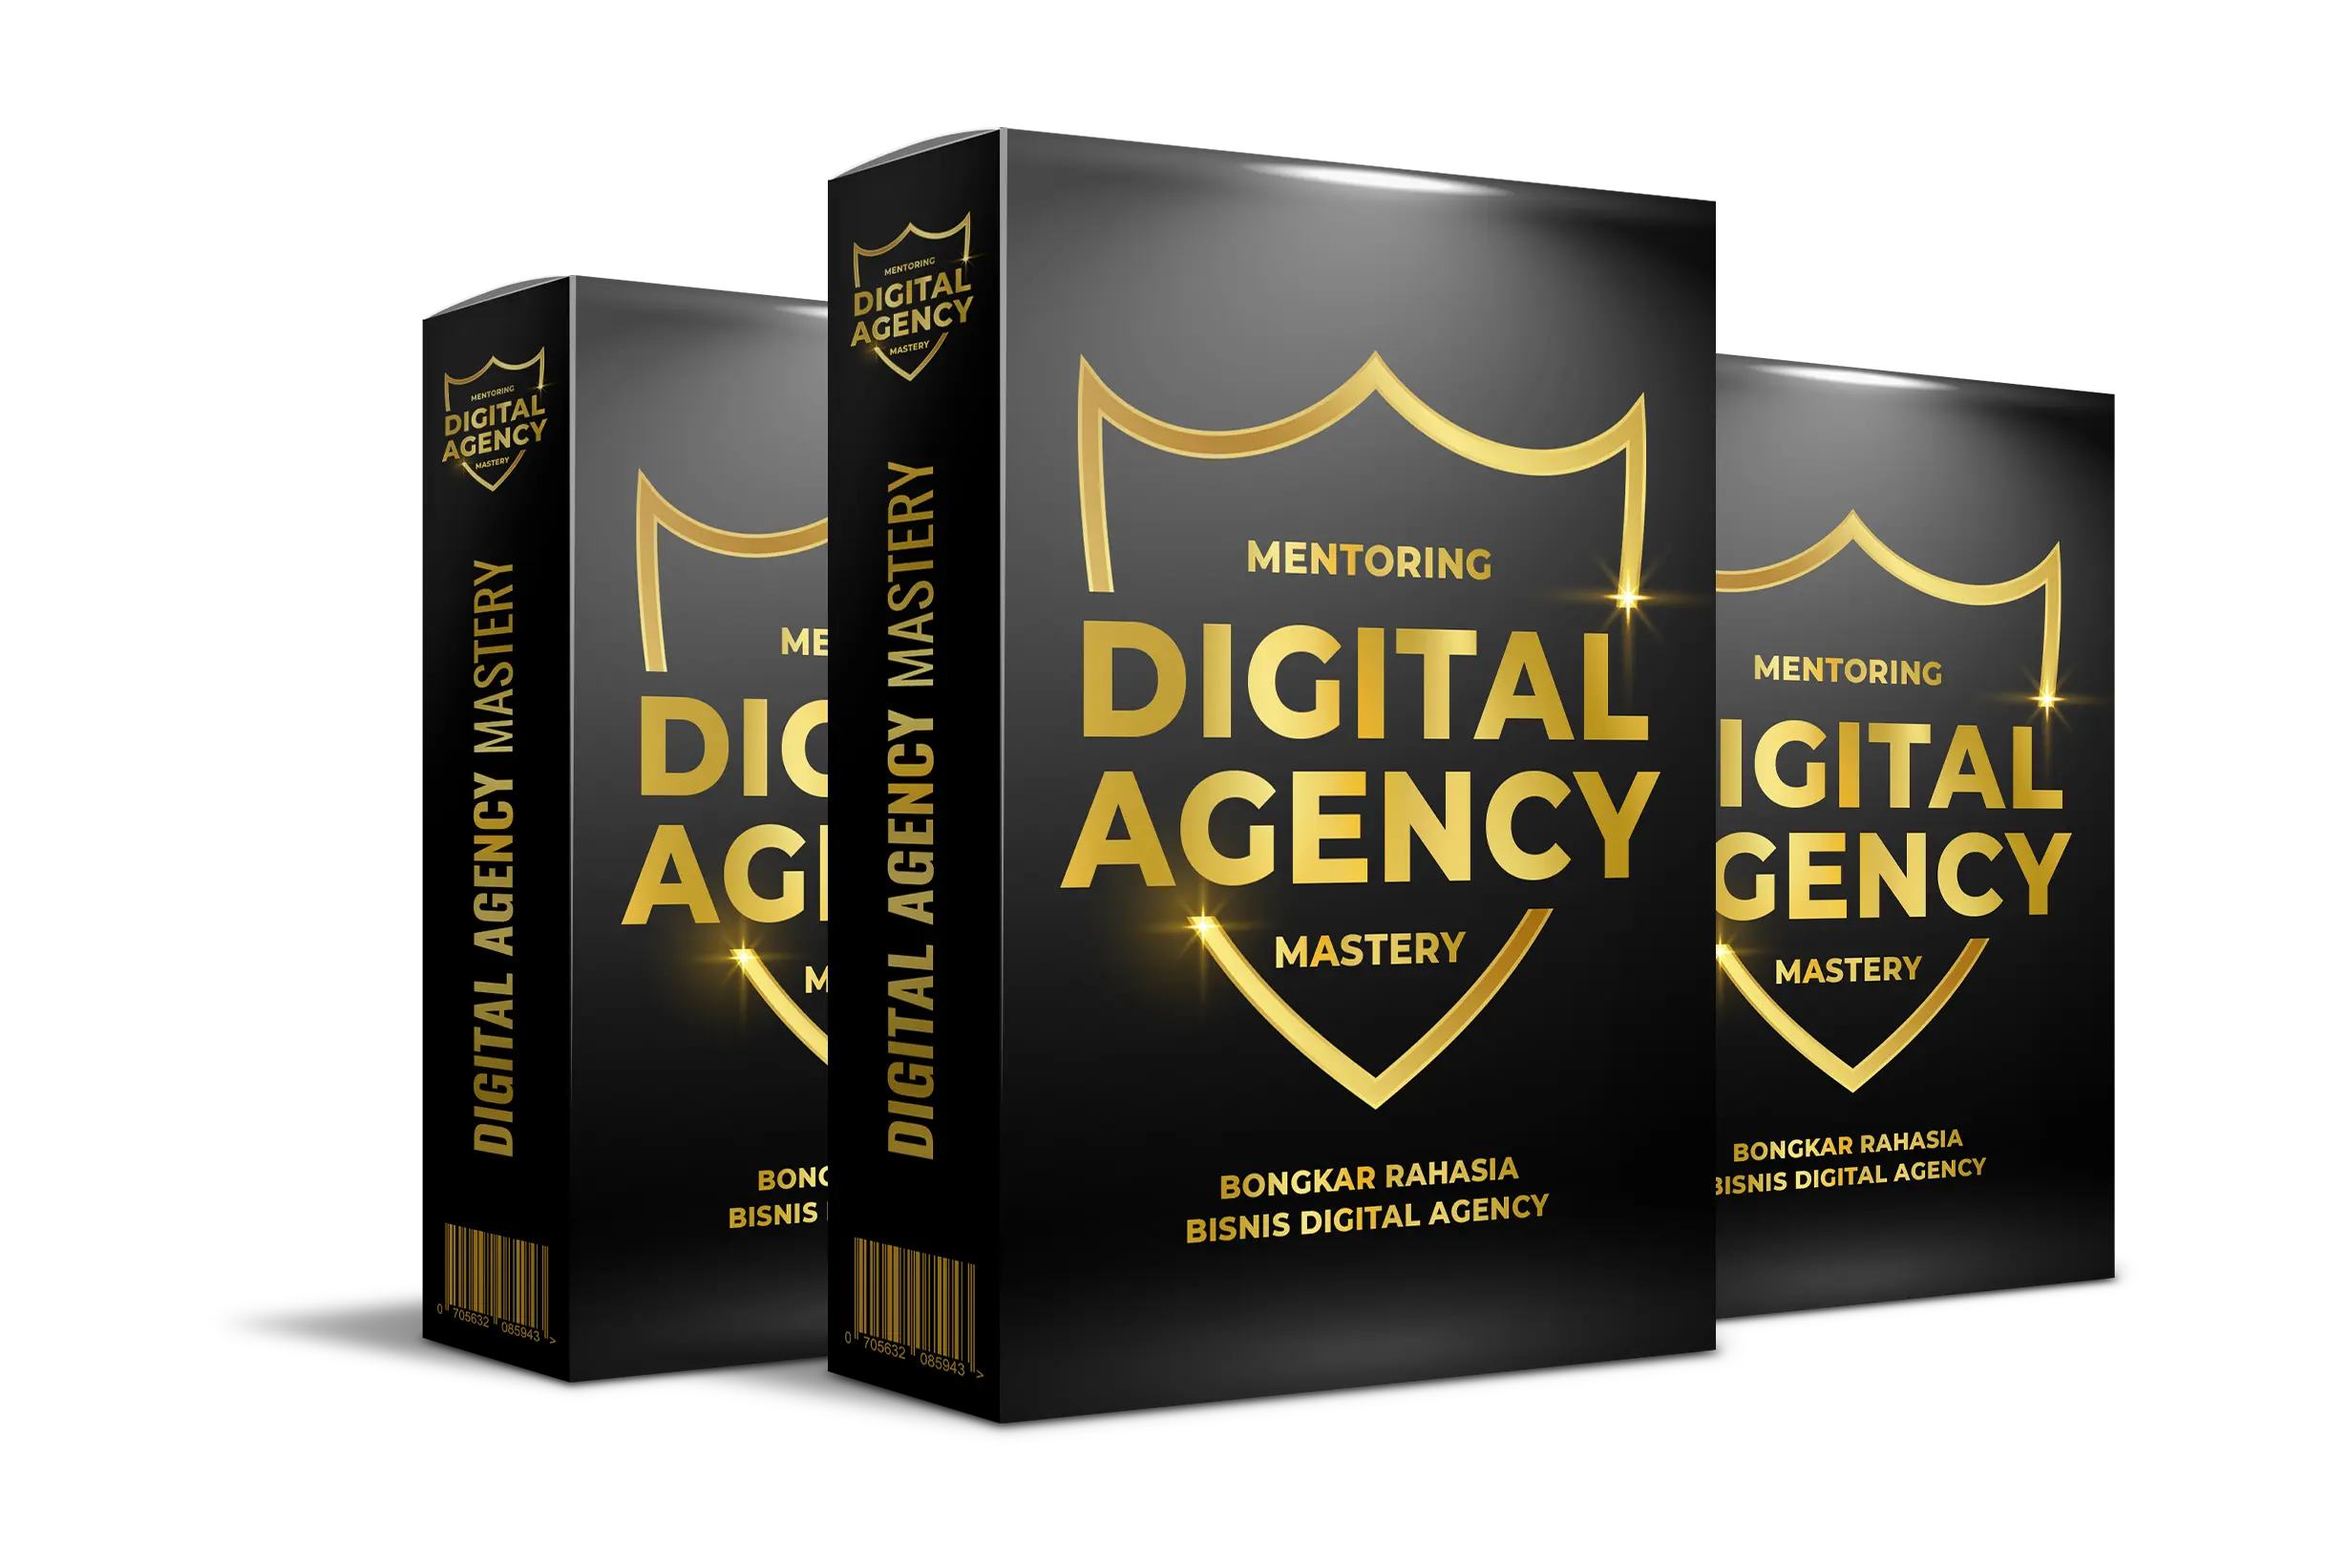 Digital Agency Mastery Cover